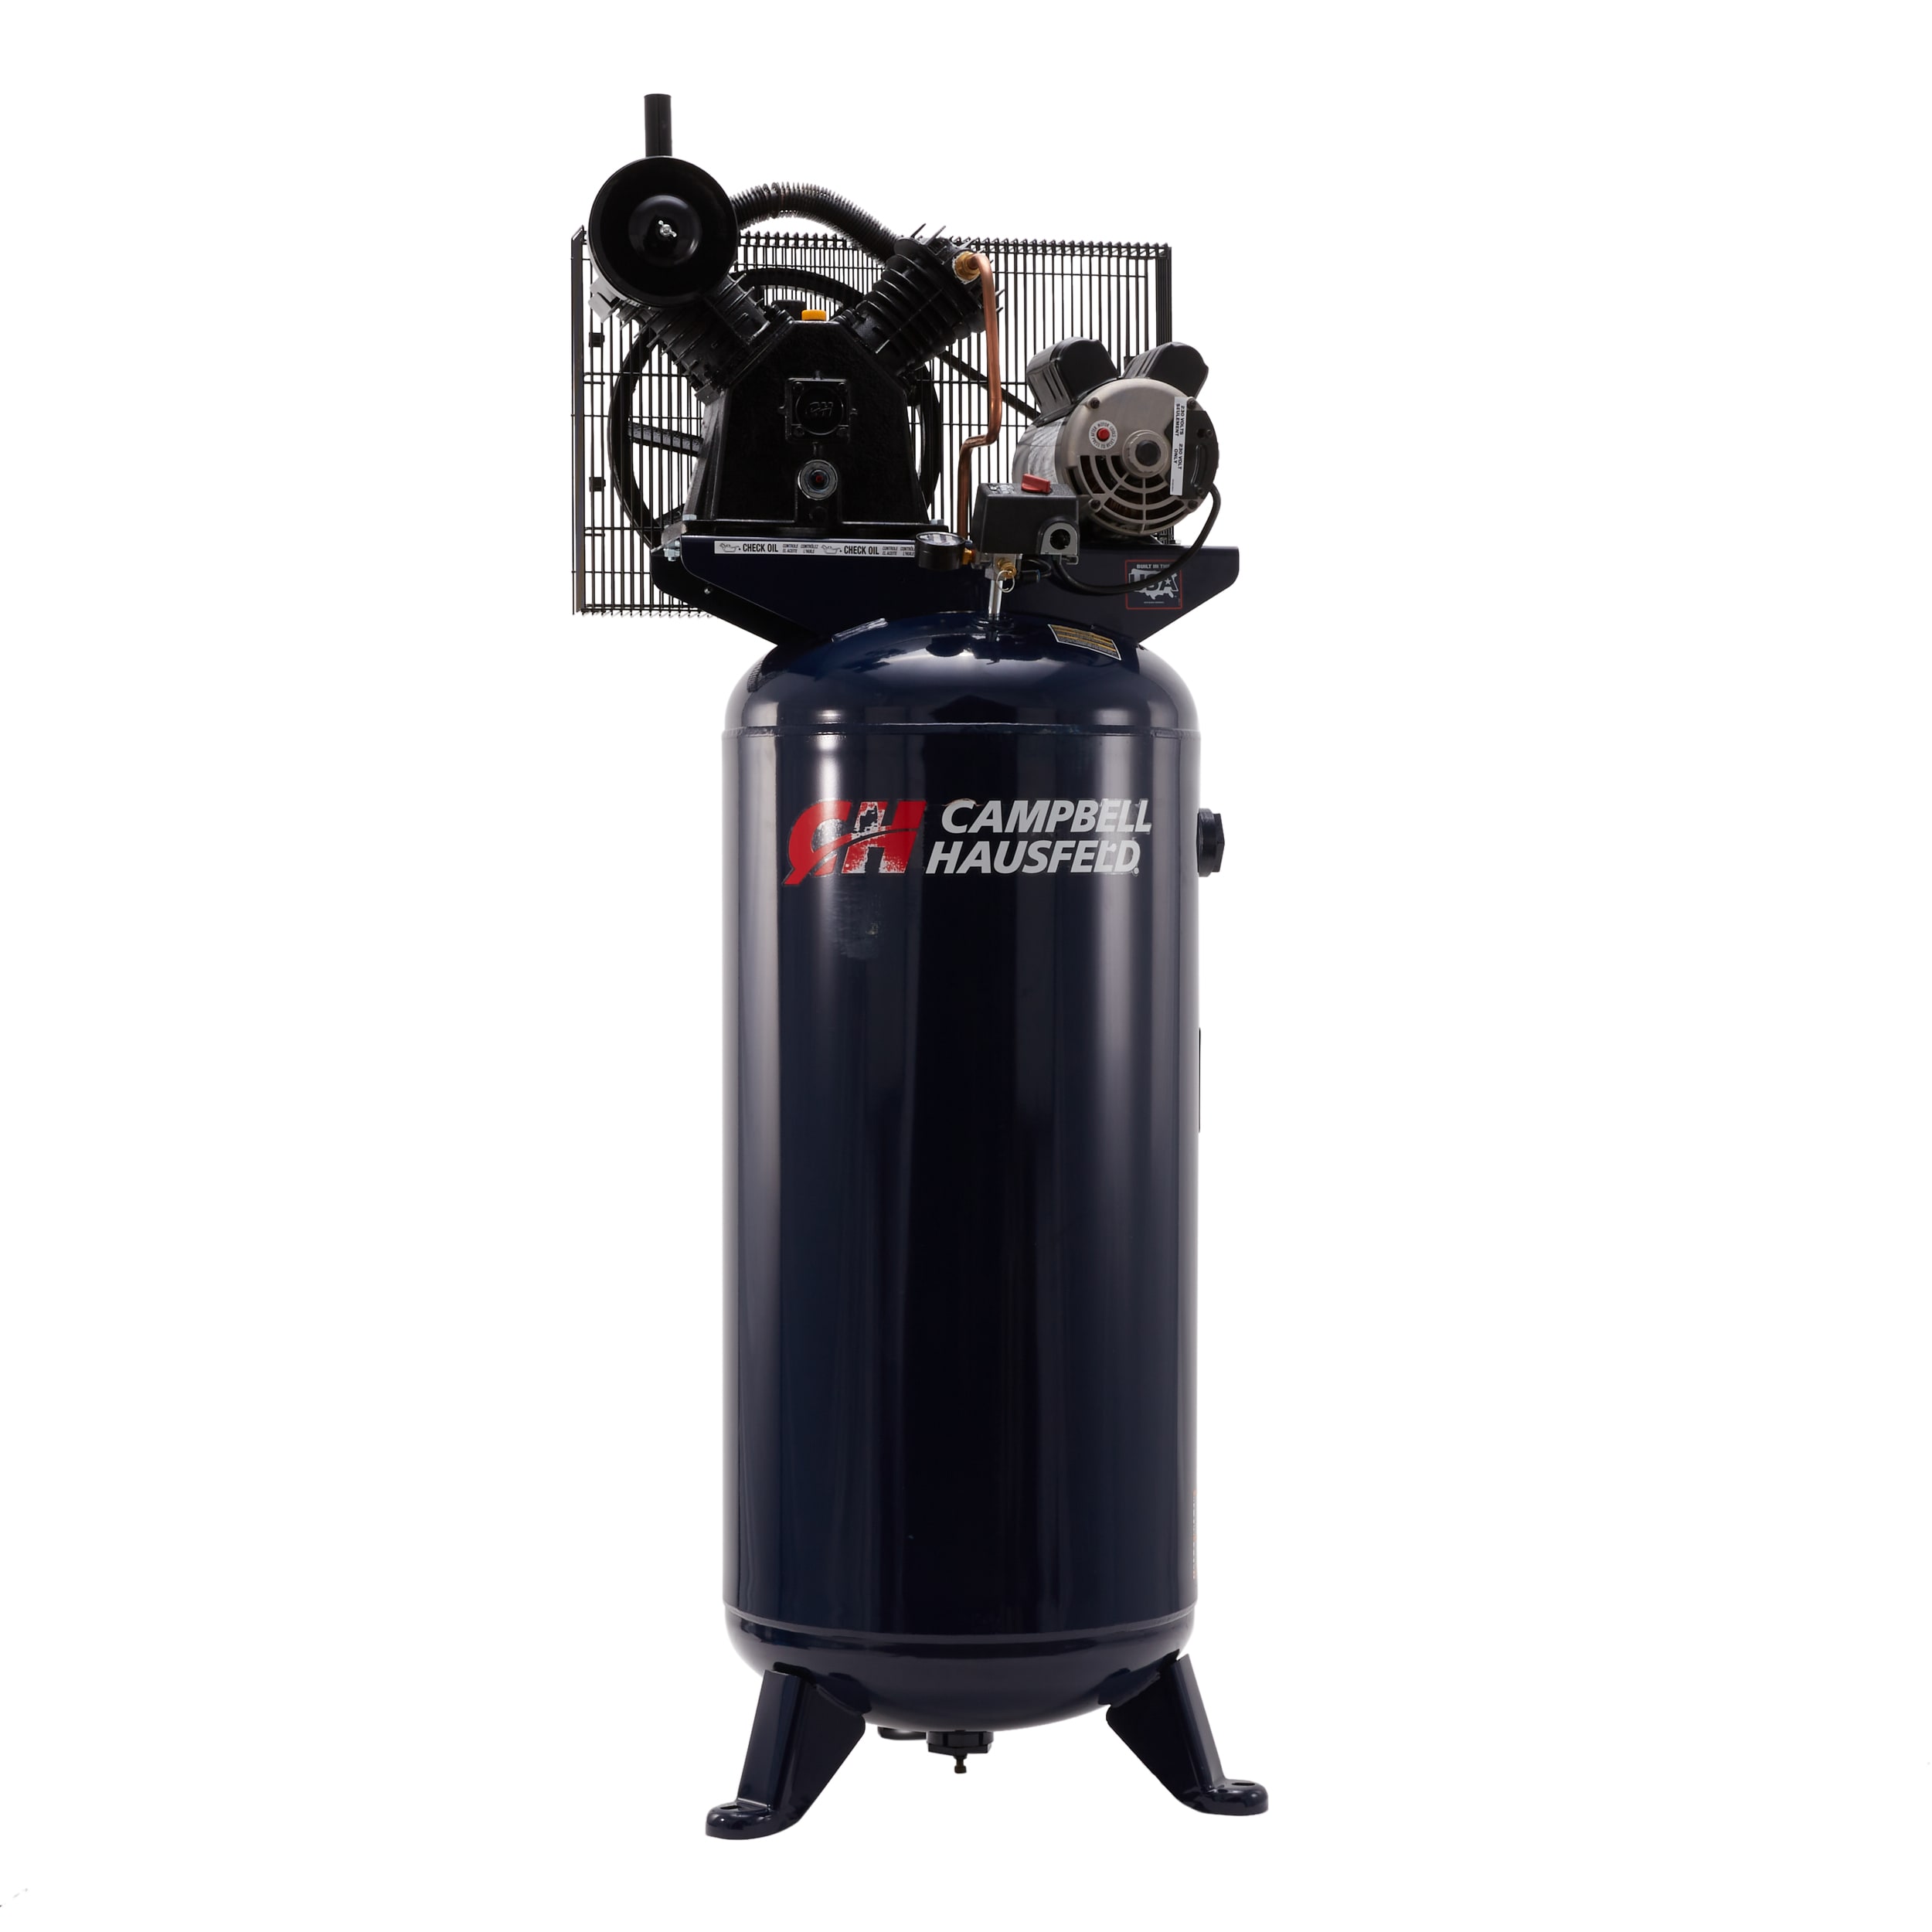 Craftsman Air Compressor w/ Electric Motor- has power + Extra Air